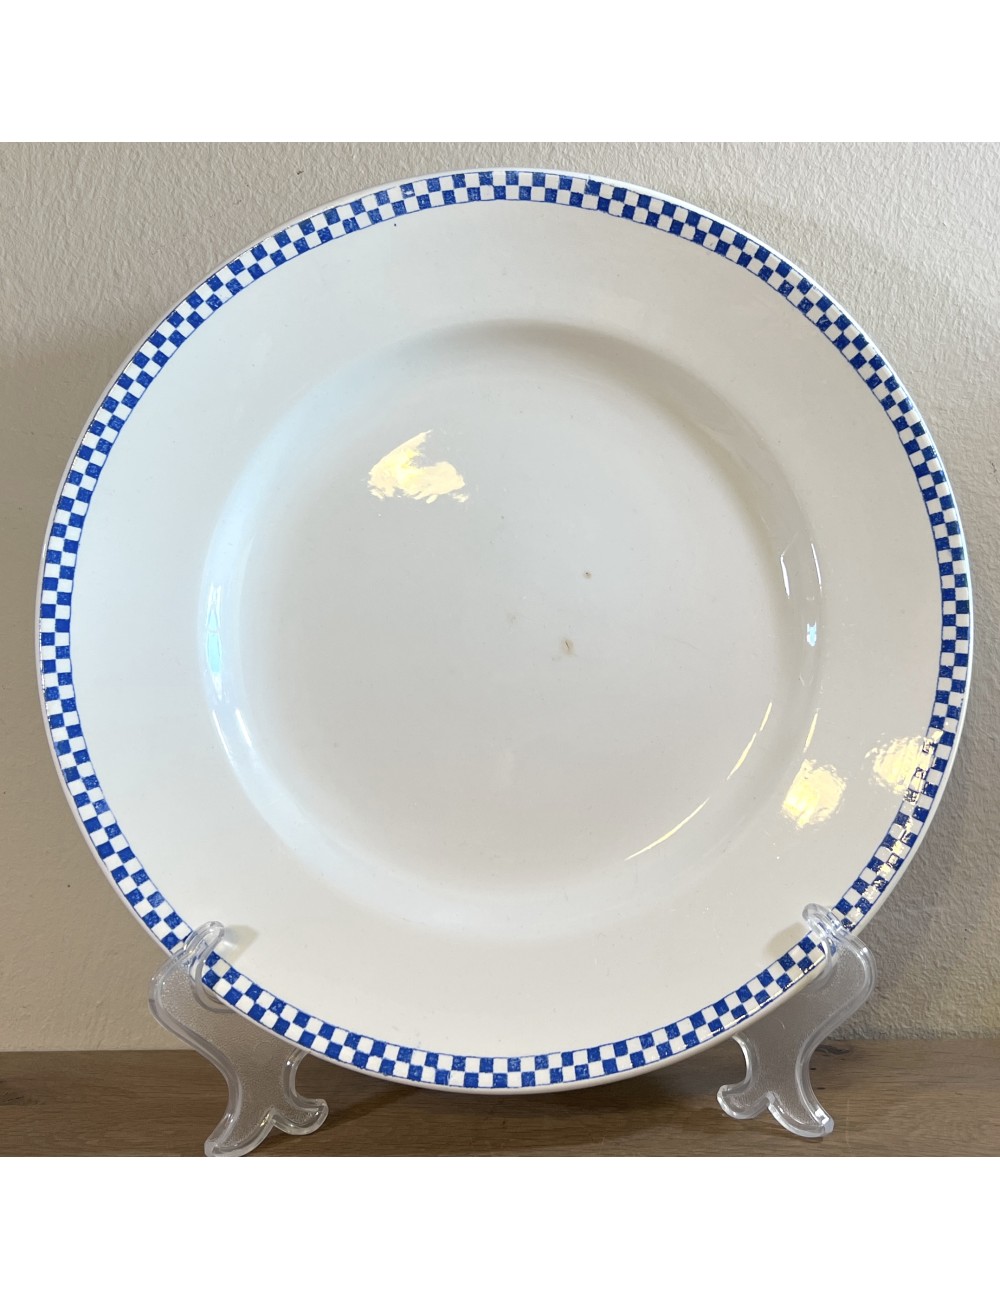 Plate - round model - Opaque de Sarreguemines Geschutzt - décor with border of blue cubes